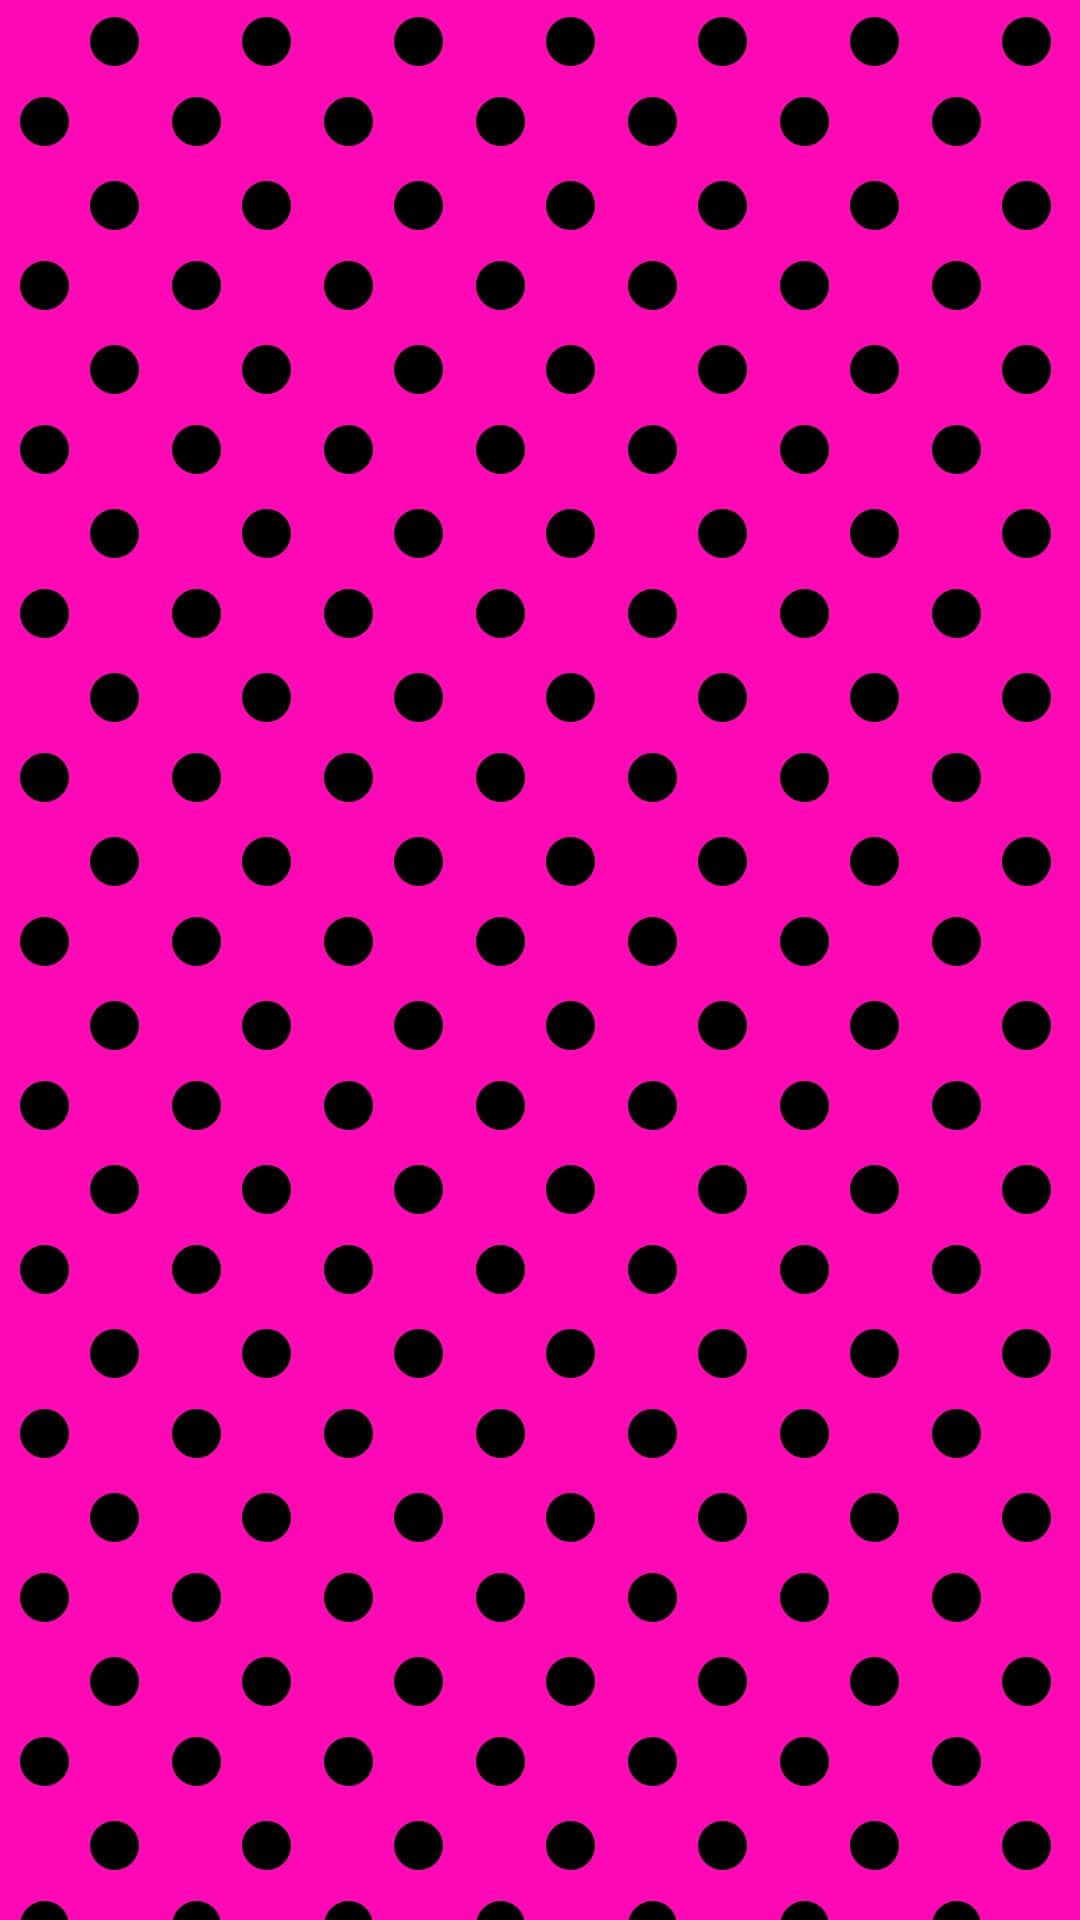 A Pink And Black Polka Dot Pattern